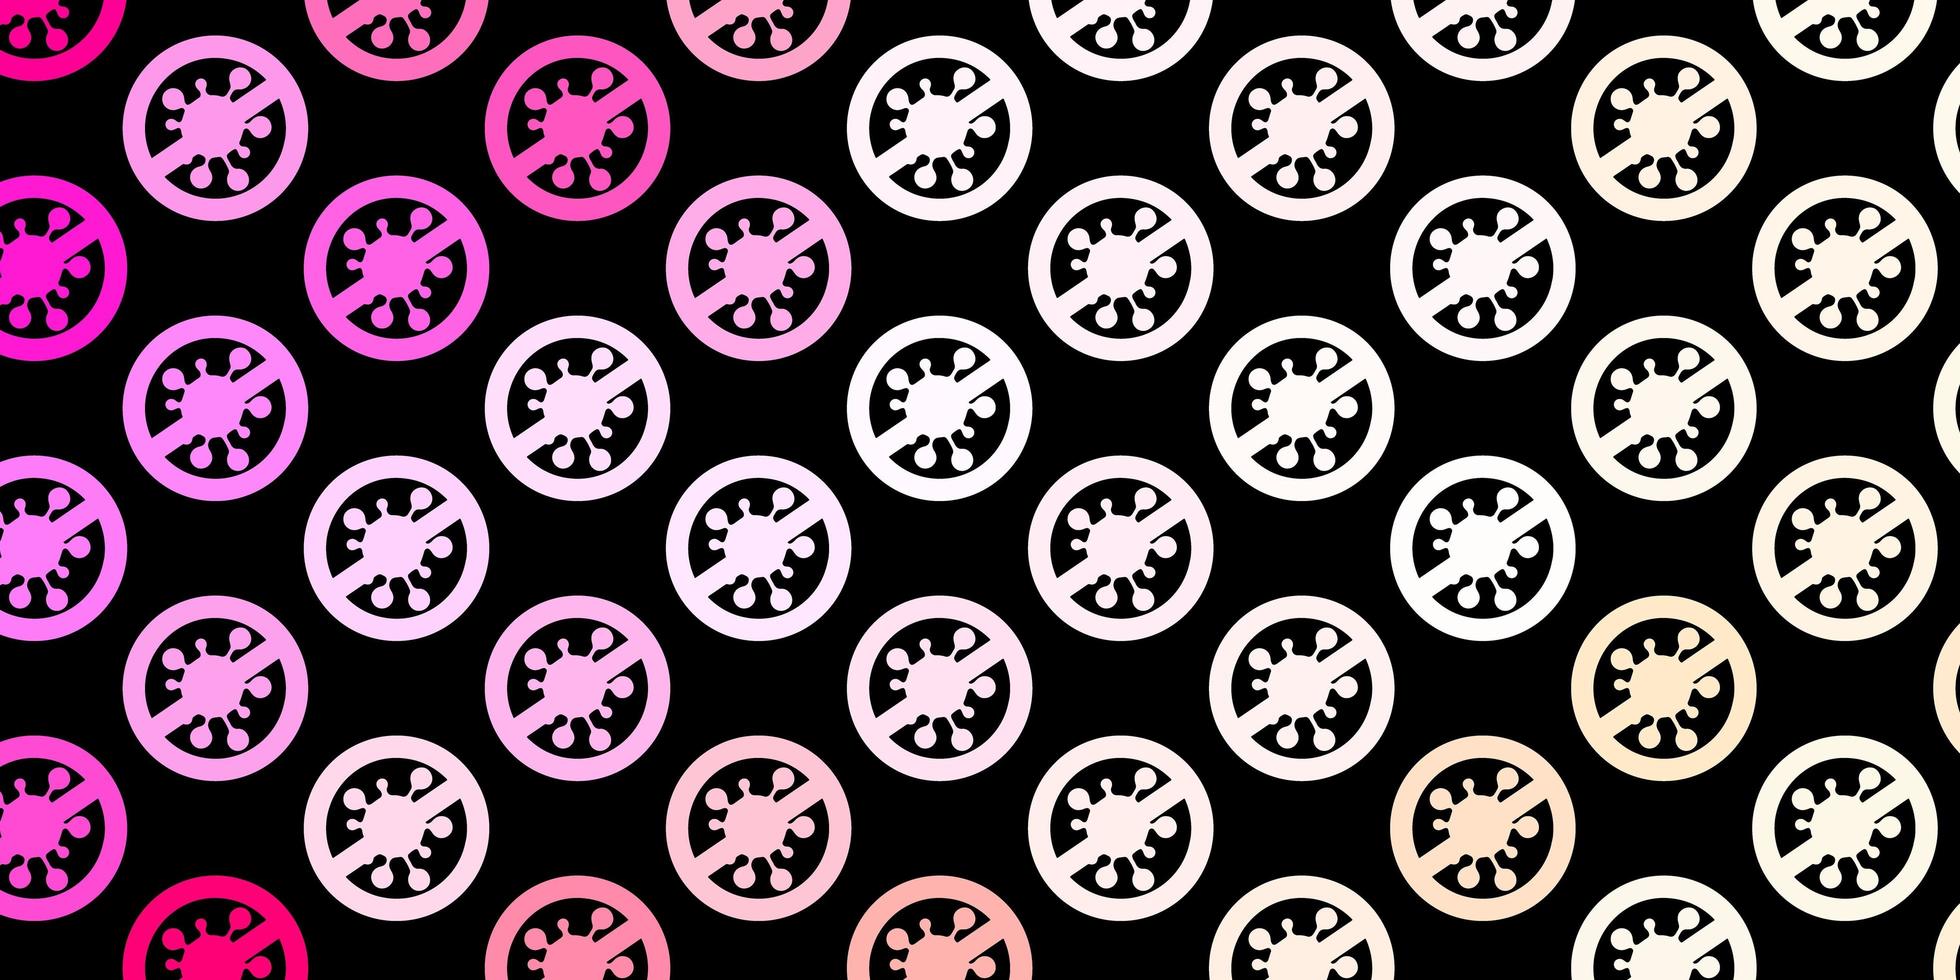 Dark Pink vector texture with disease symbols